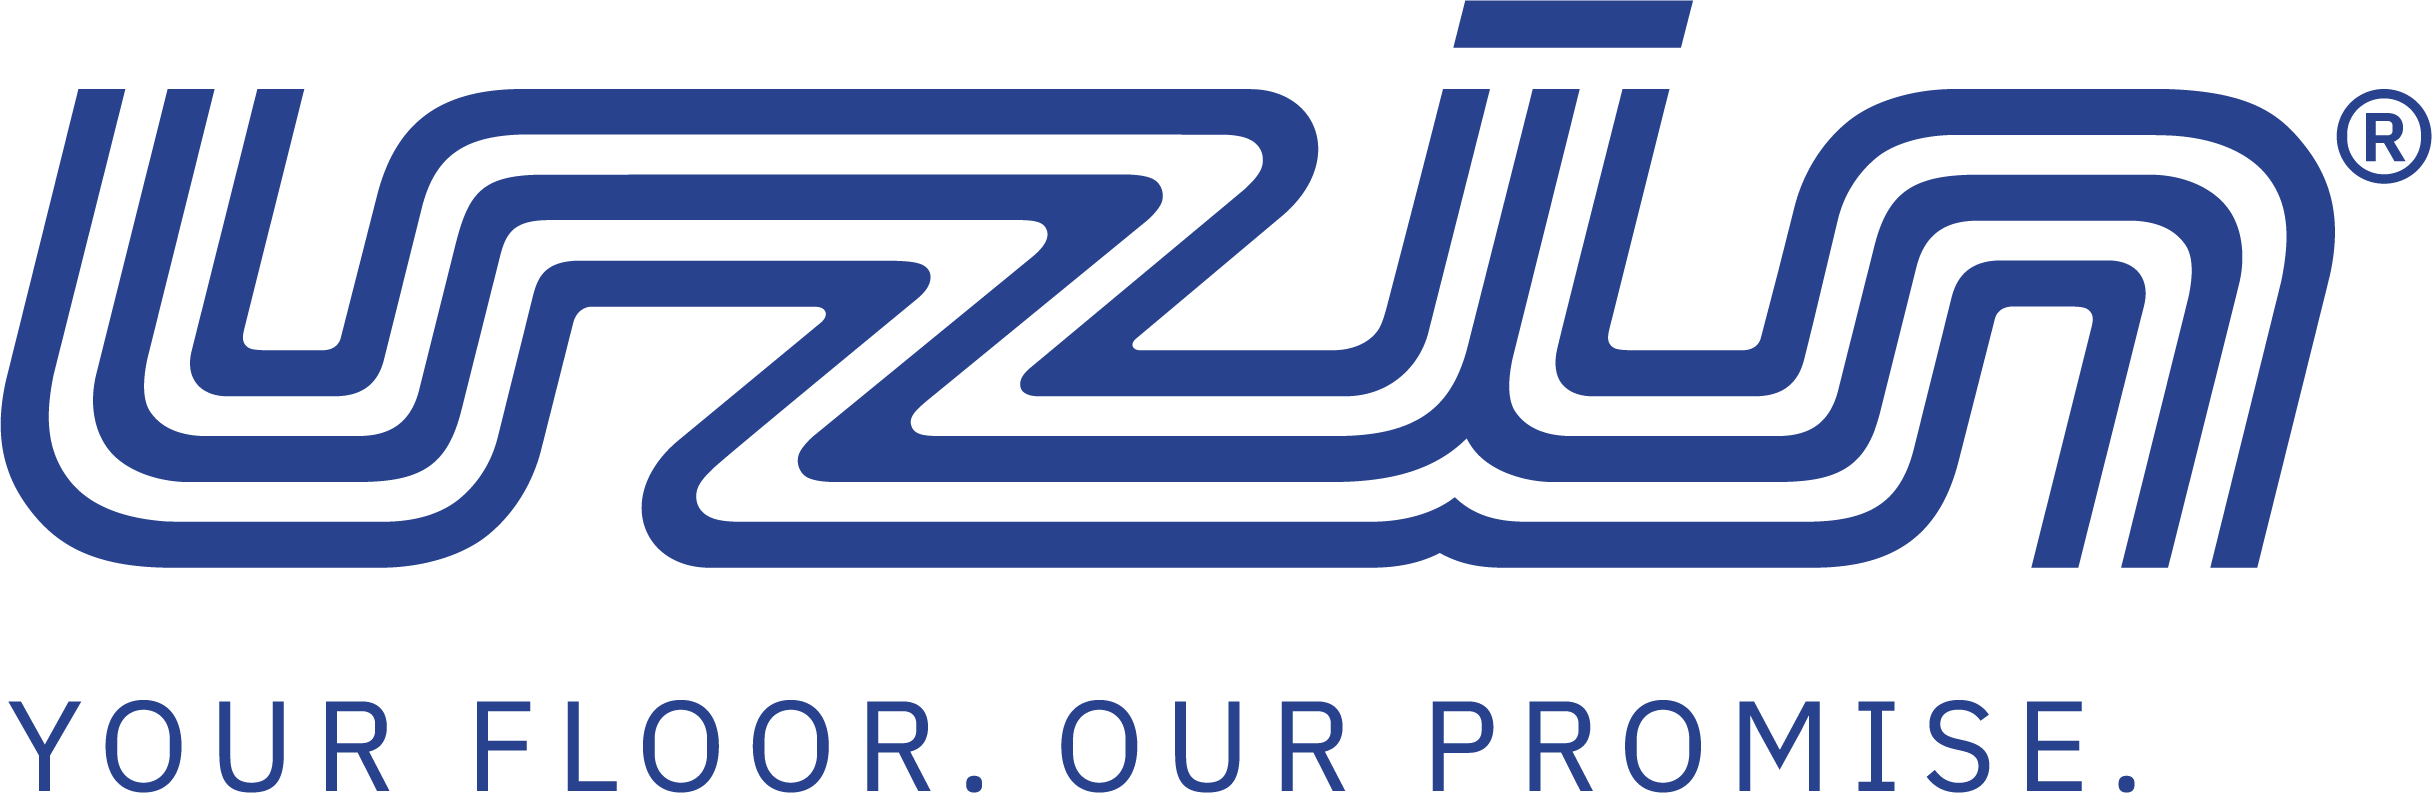 UZIN Logo Blue Claim RGB US 2021 11